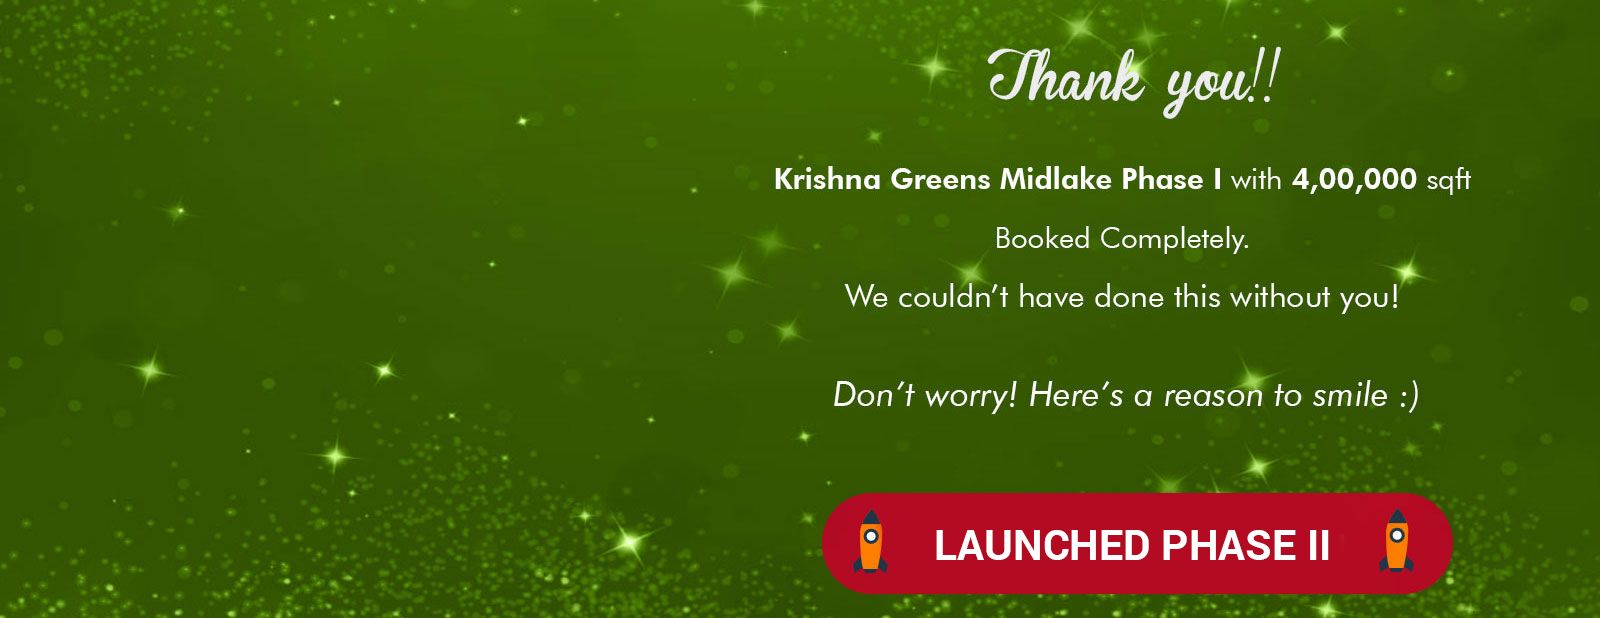 Krishna Greens Midlake